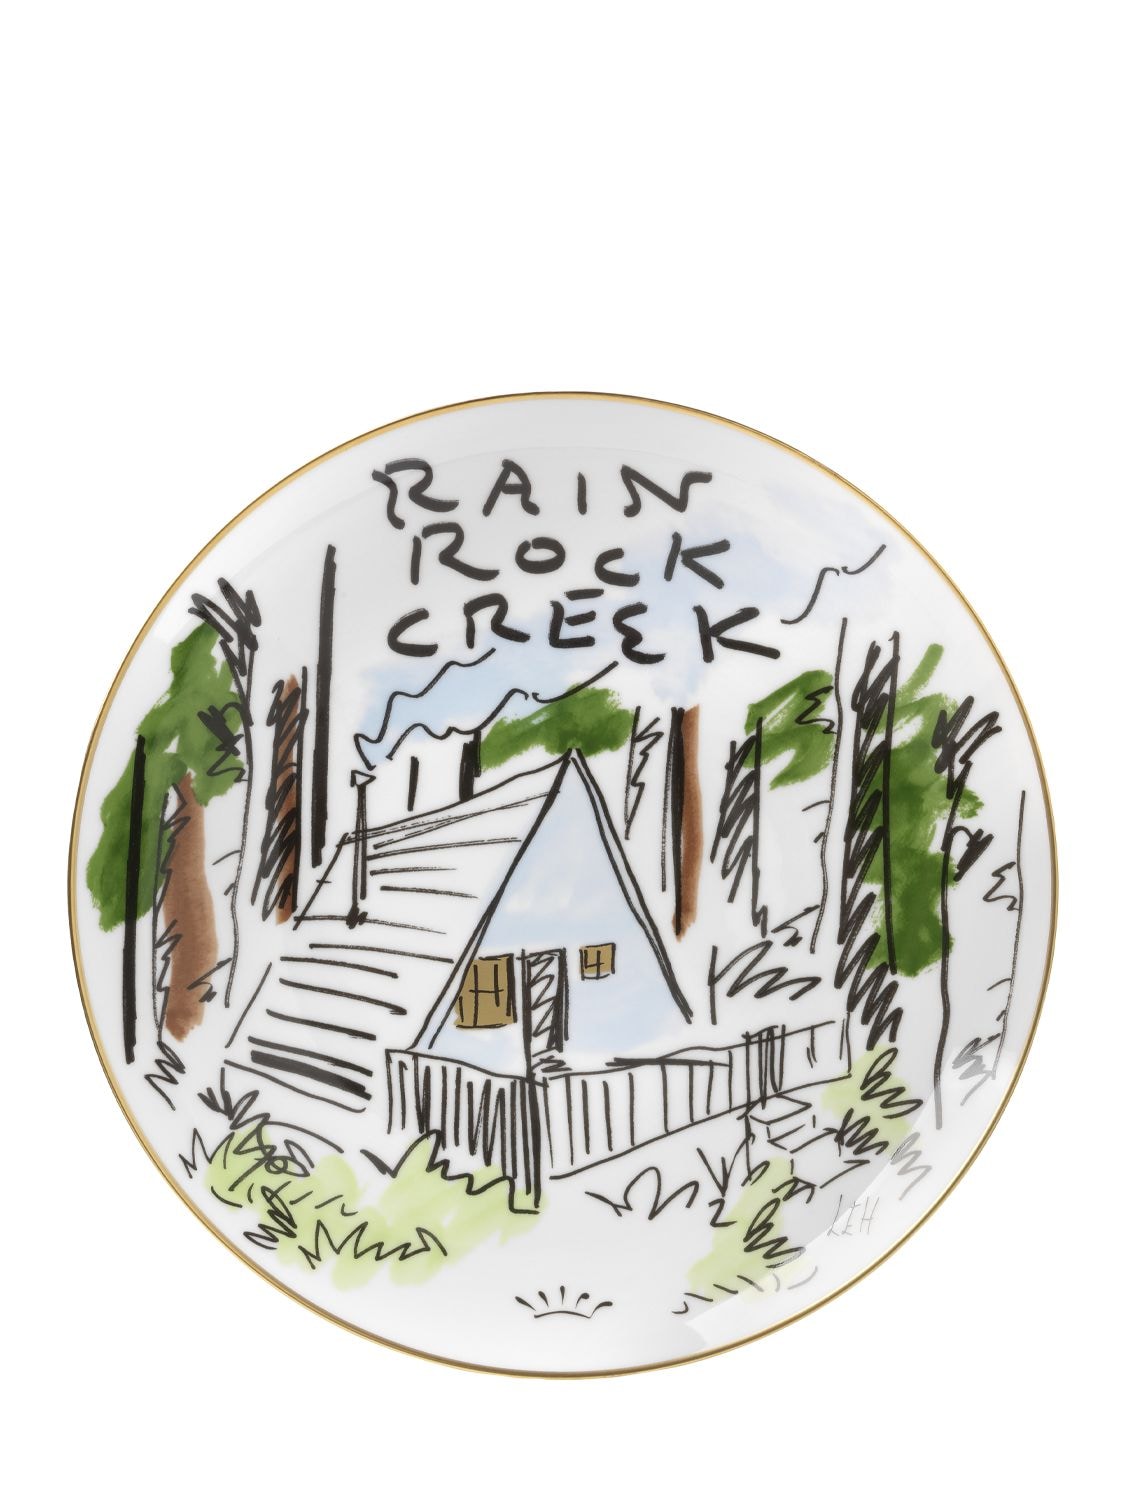 Image of Rain Rock Creek Plate